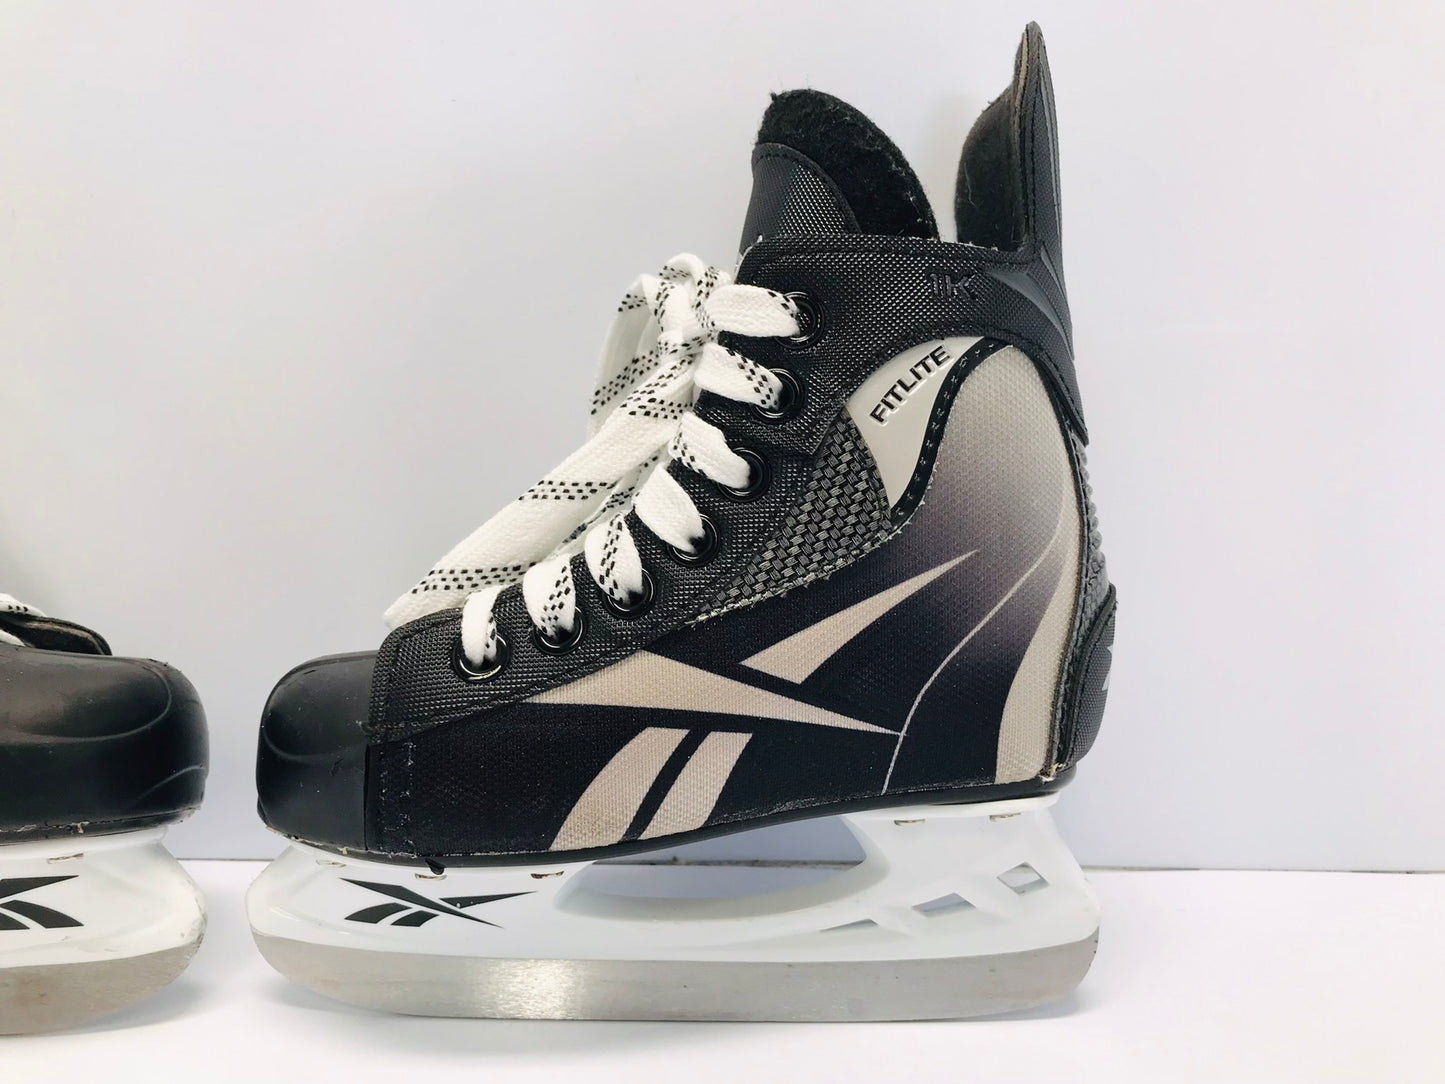 Hockey Skates Child Size 10 Shoe Size Toddler Reebok Excellent